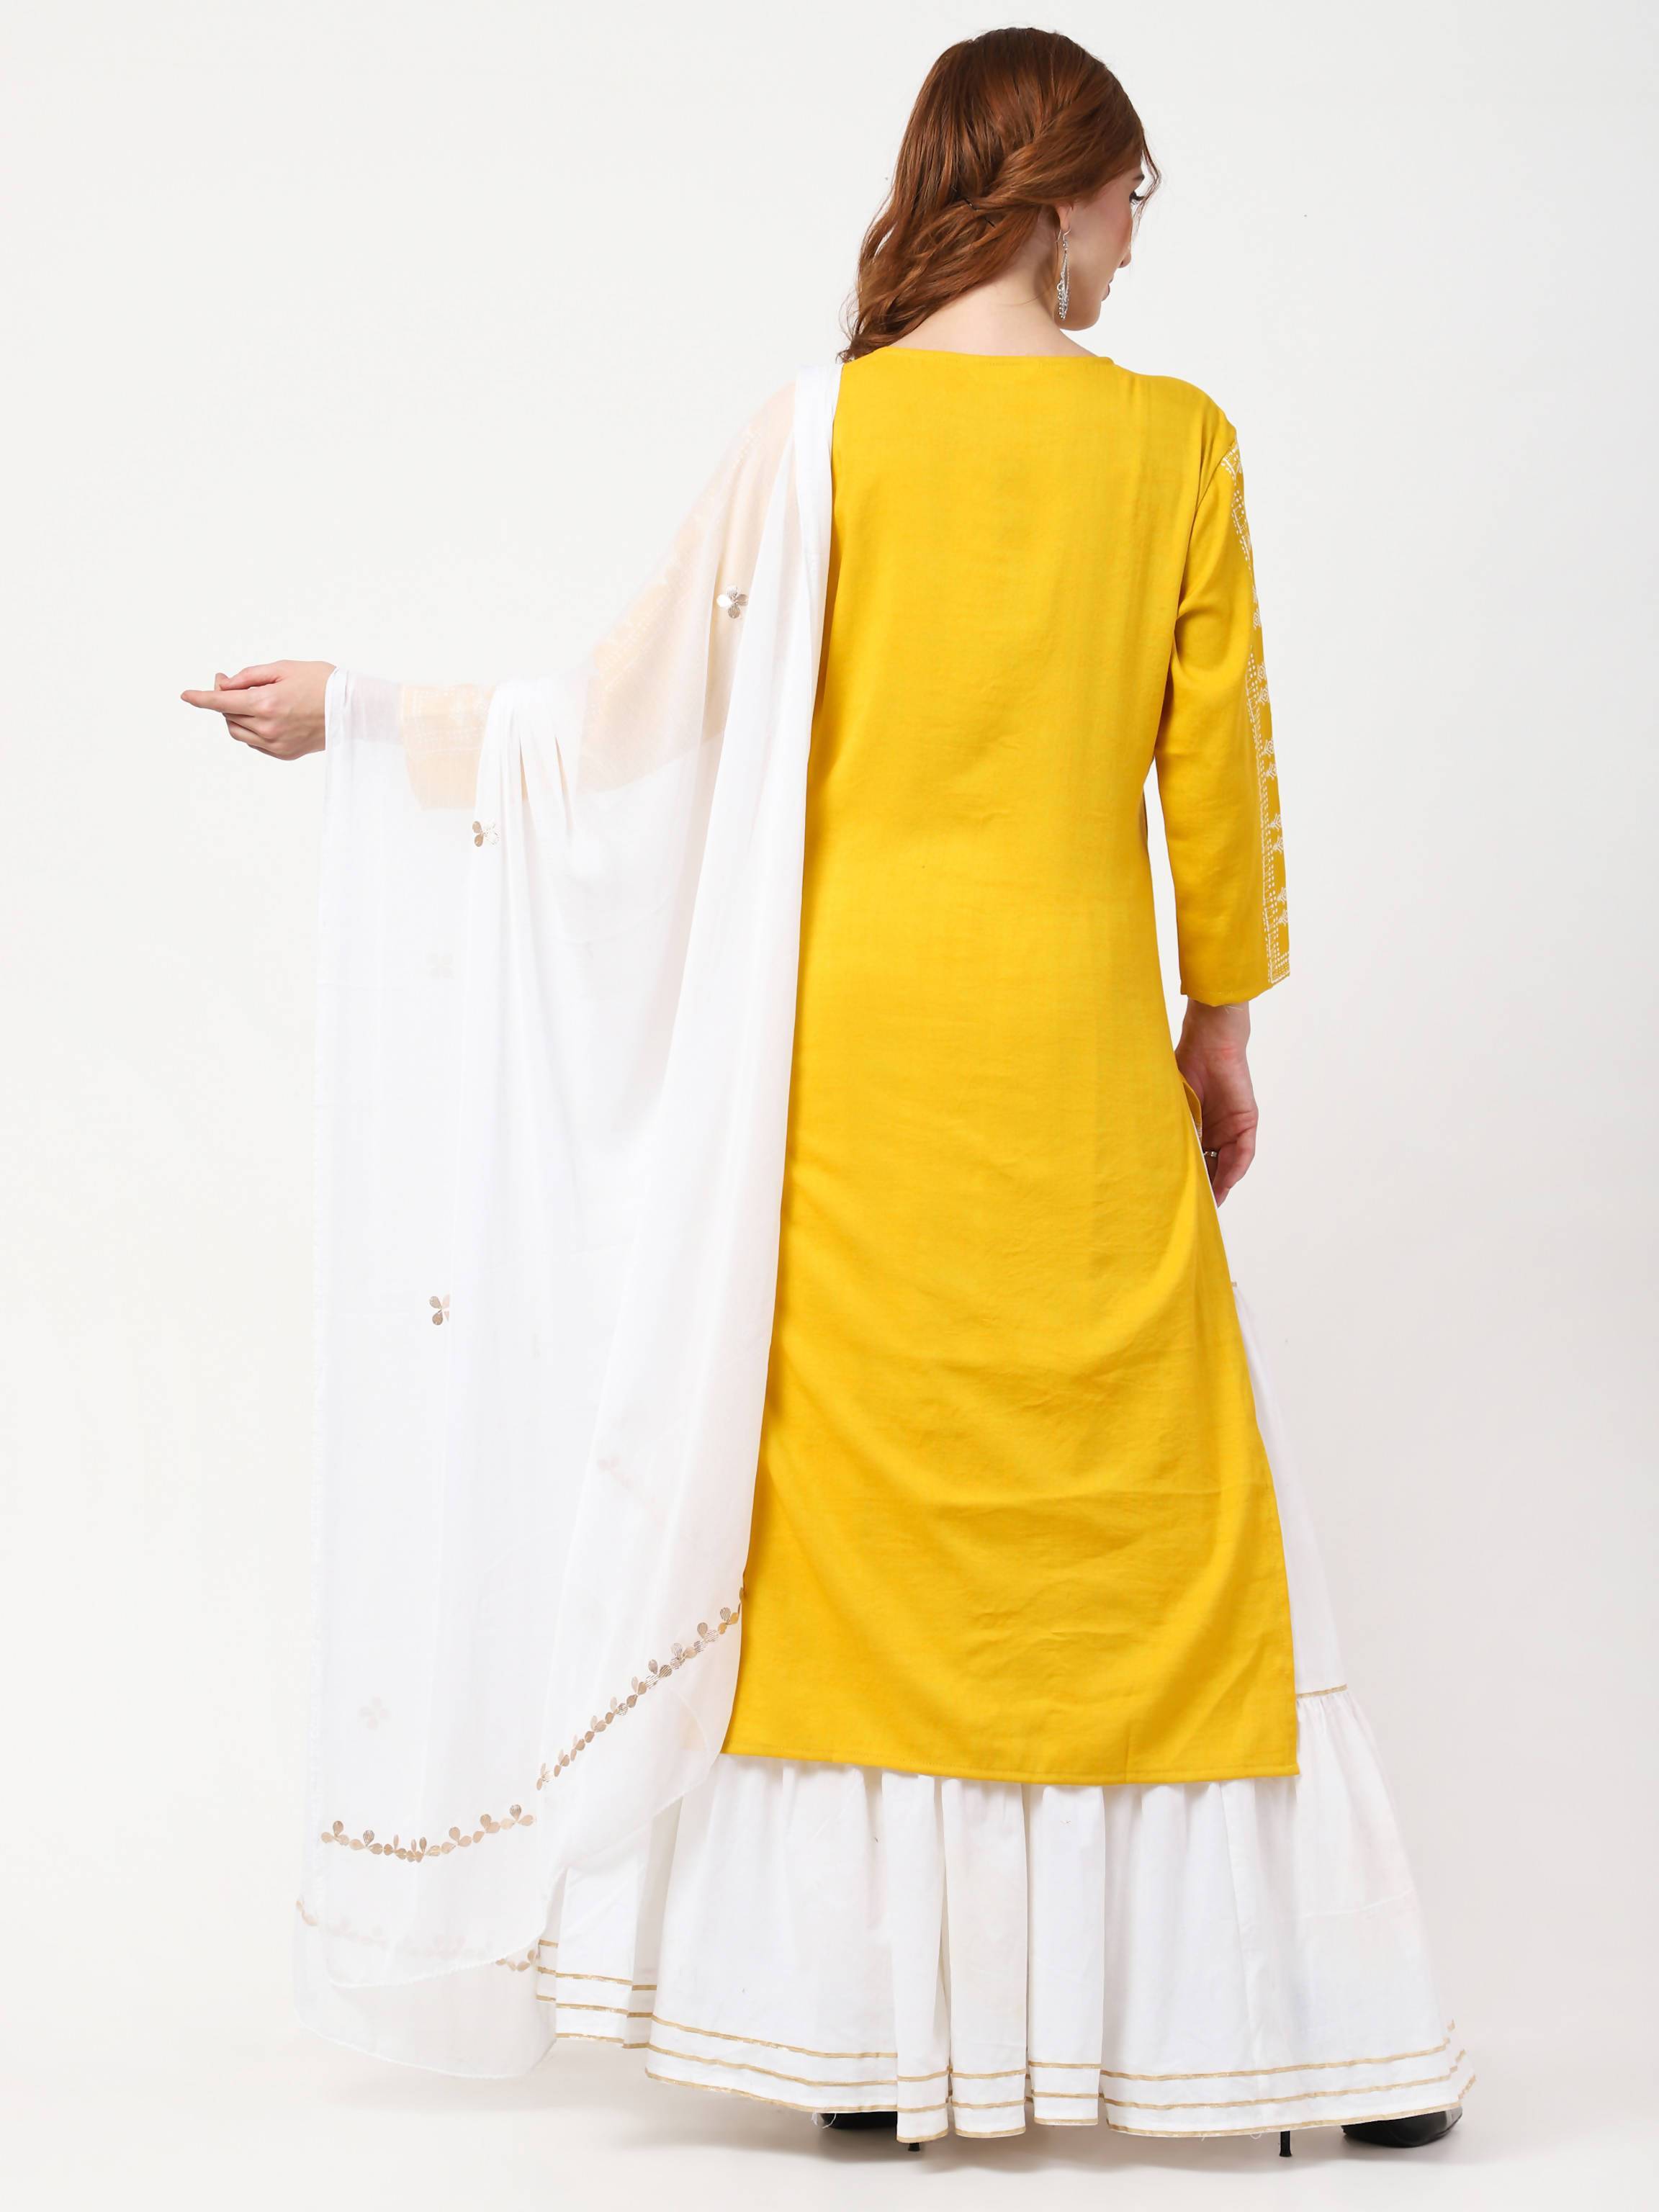 Women's Mustard & White Cotton Kurta With Skirt & Embroidered Dupatta Set - Cheera